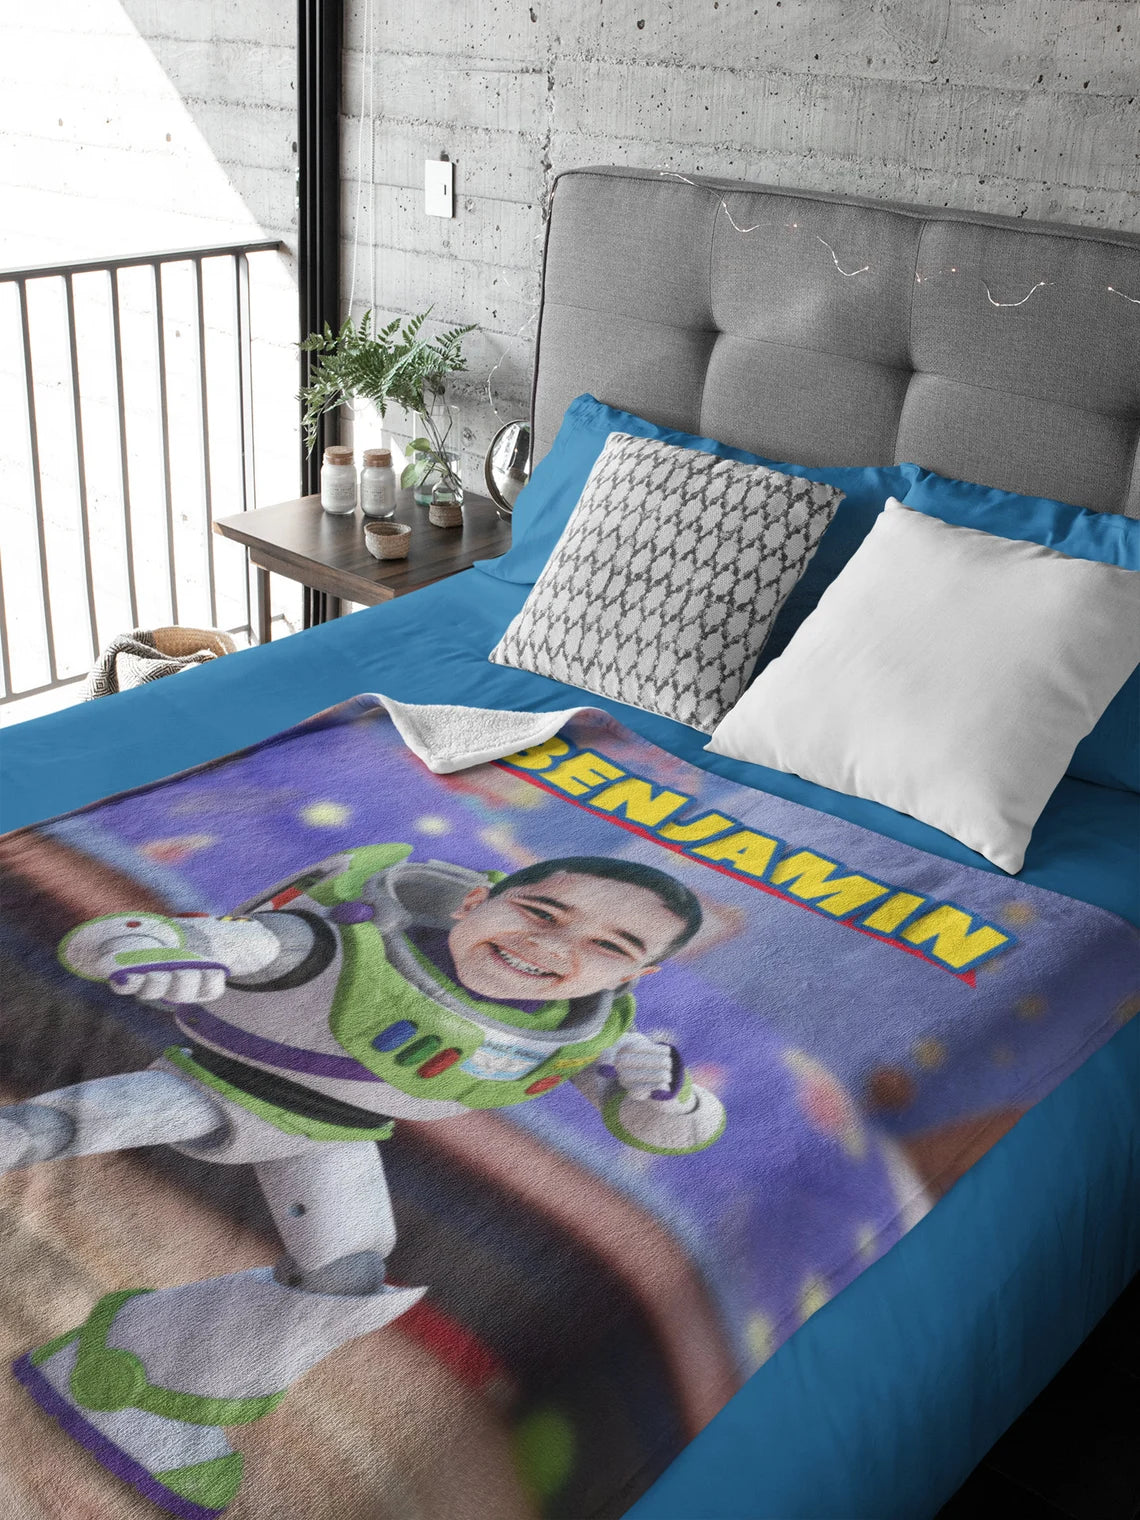 The Buzz Lightyear Blanket